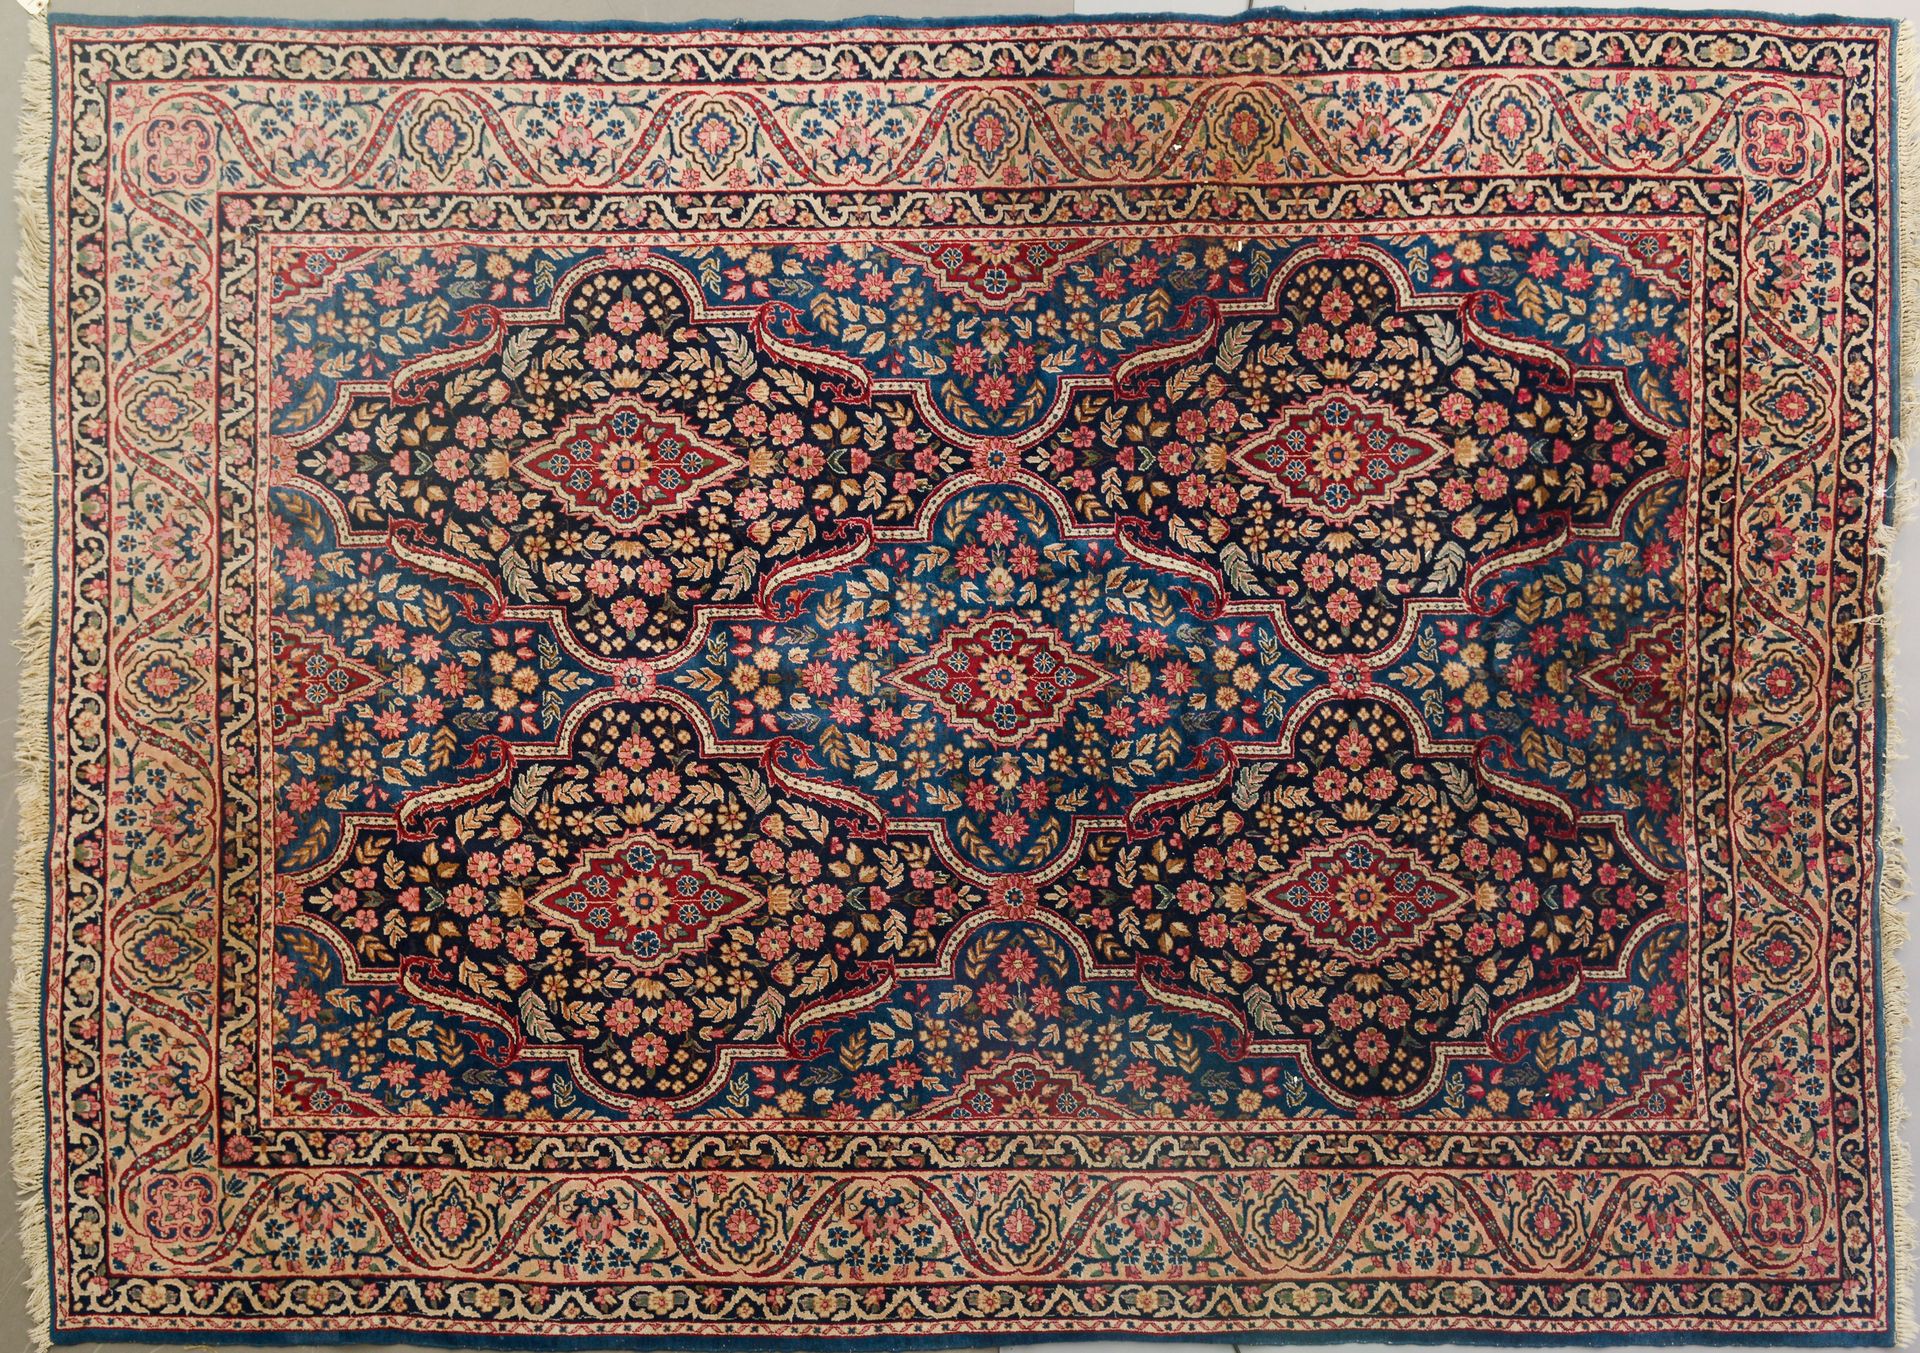 Null 大型基尔曼羊毛地毯在棉质基础上，装饰有蓝色和黑色交替的花纹图案。五个边框，主要的一个边框是奶油色的背景。
伊朗，约1975年。
长 : 371 cm &hellip;